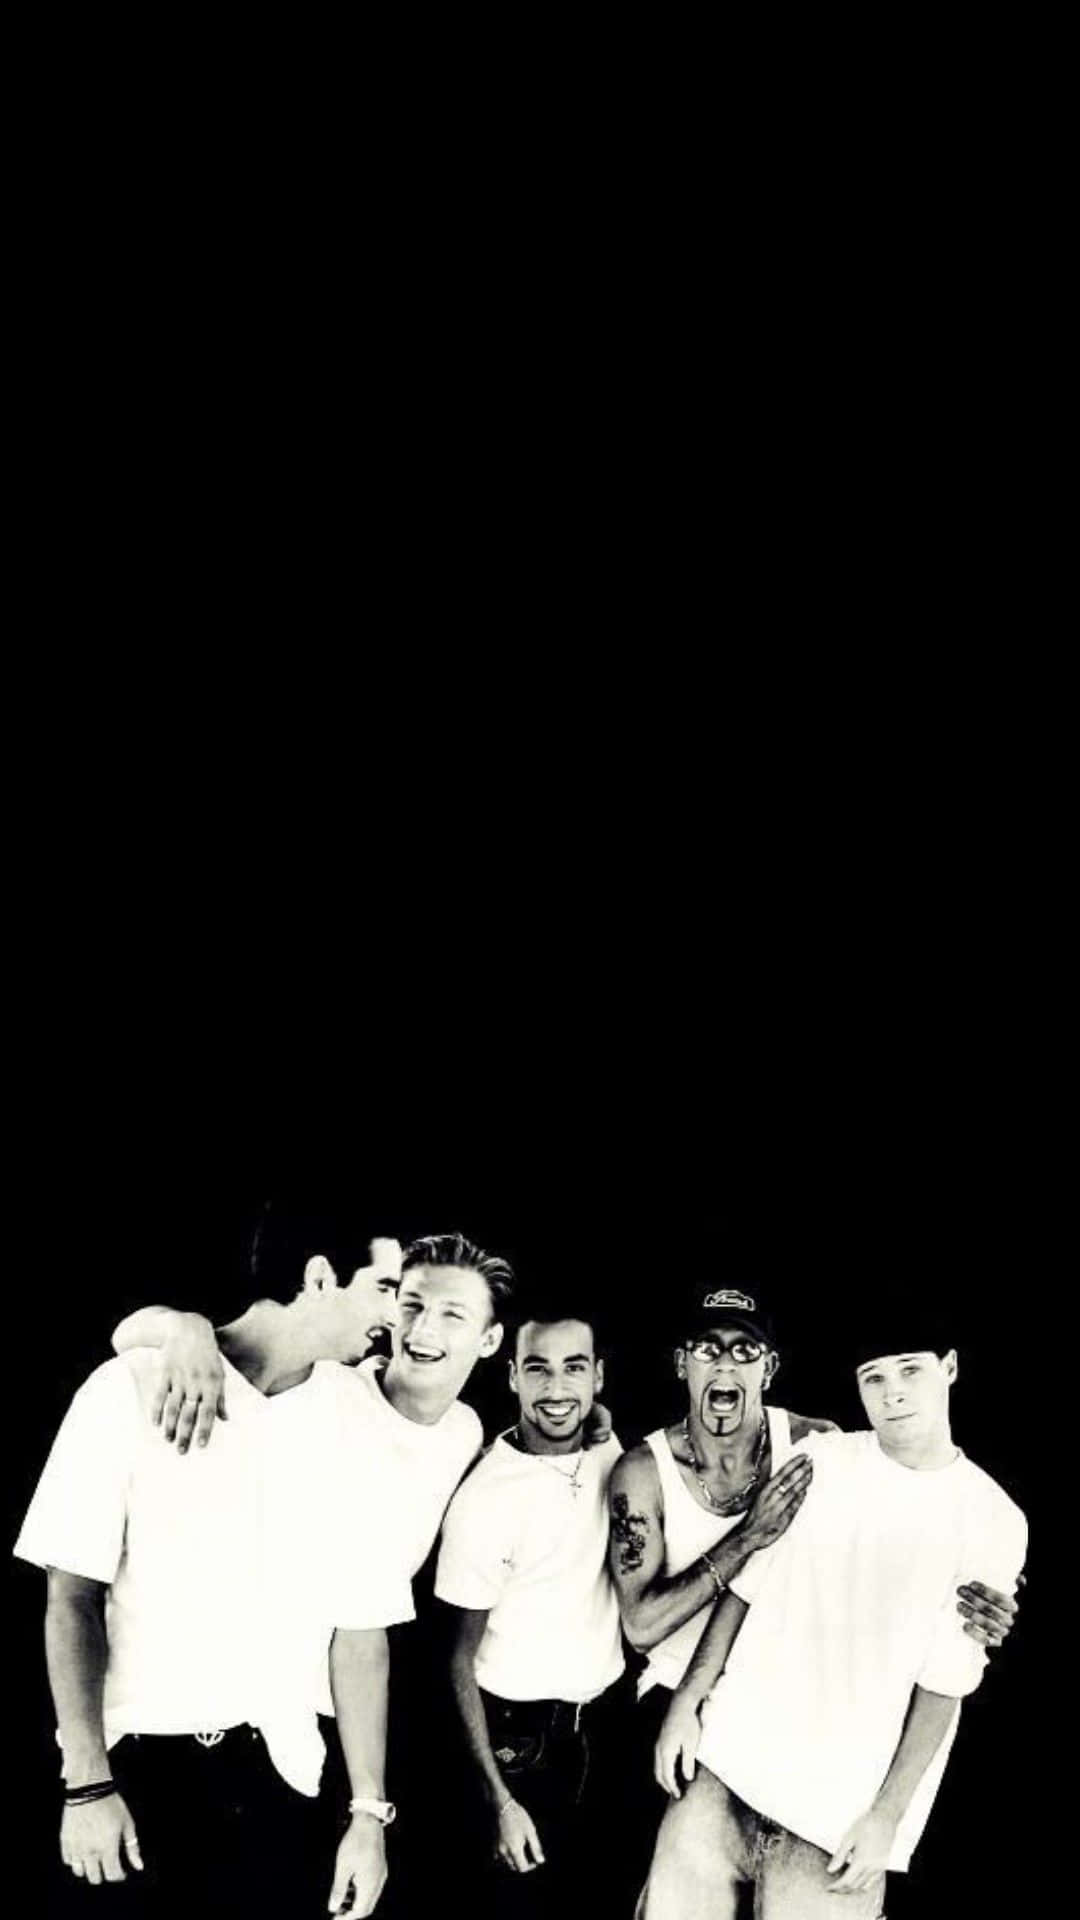 The Iconic "Backstreet Boys"